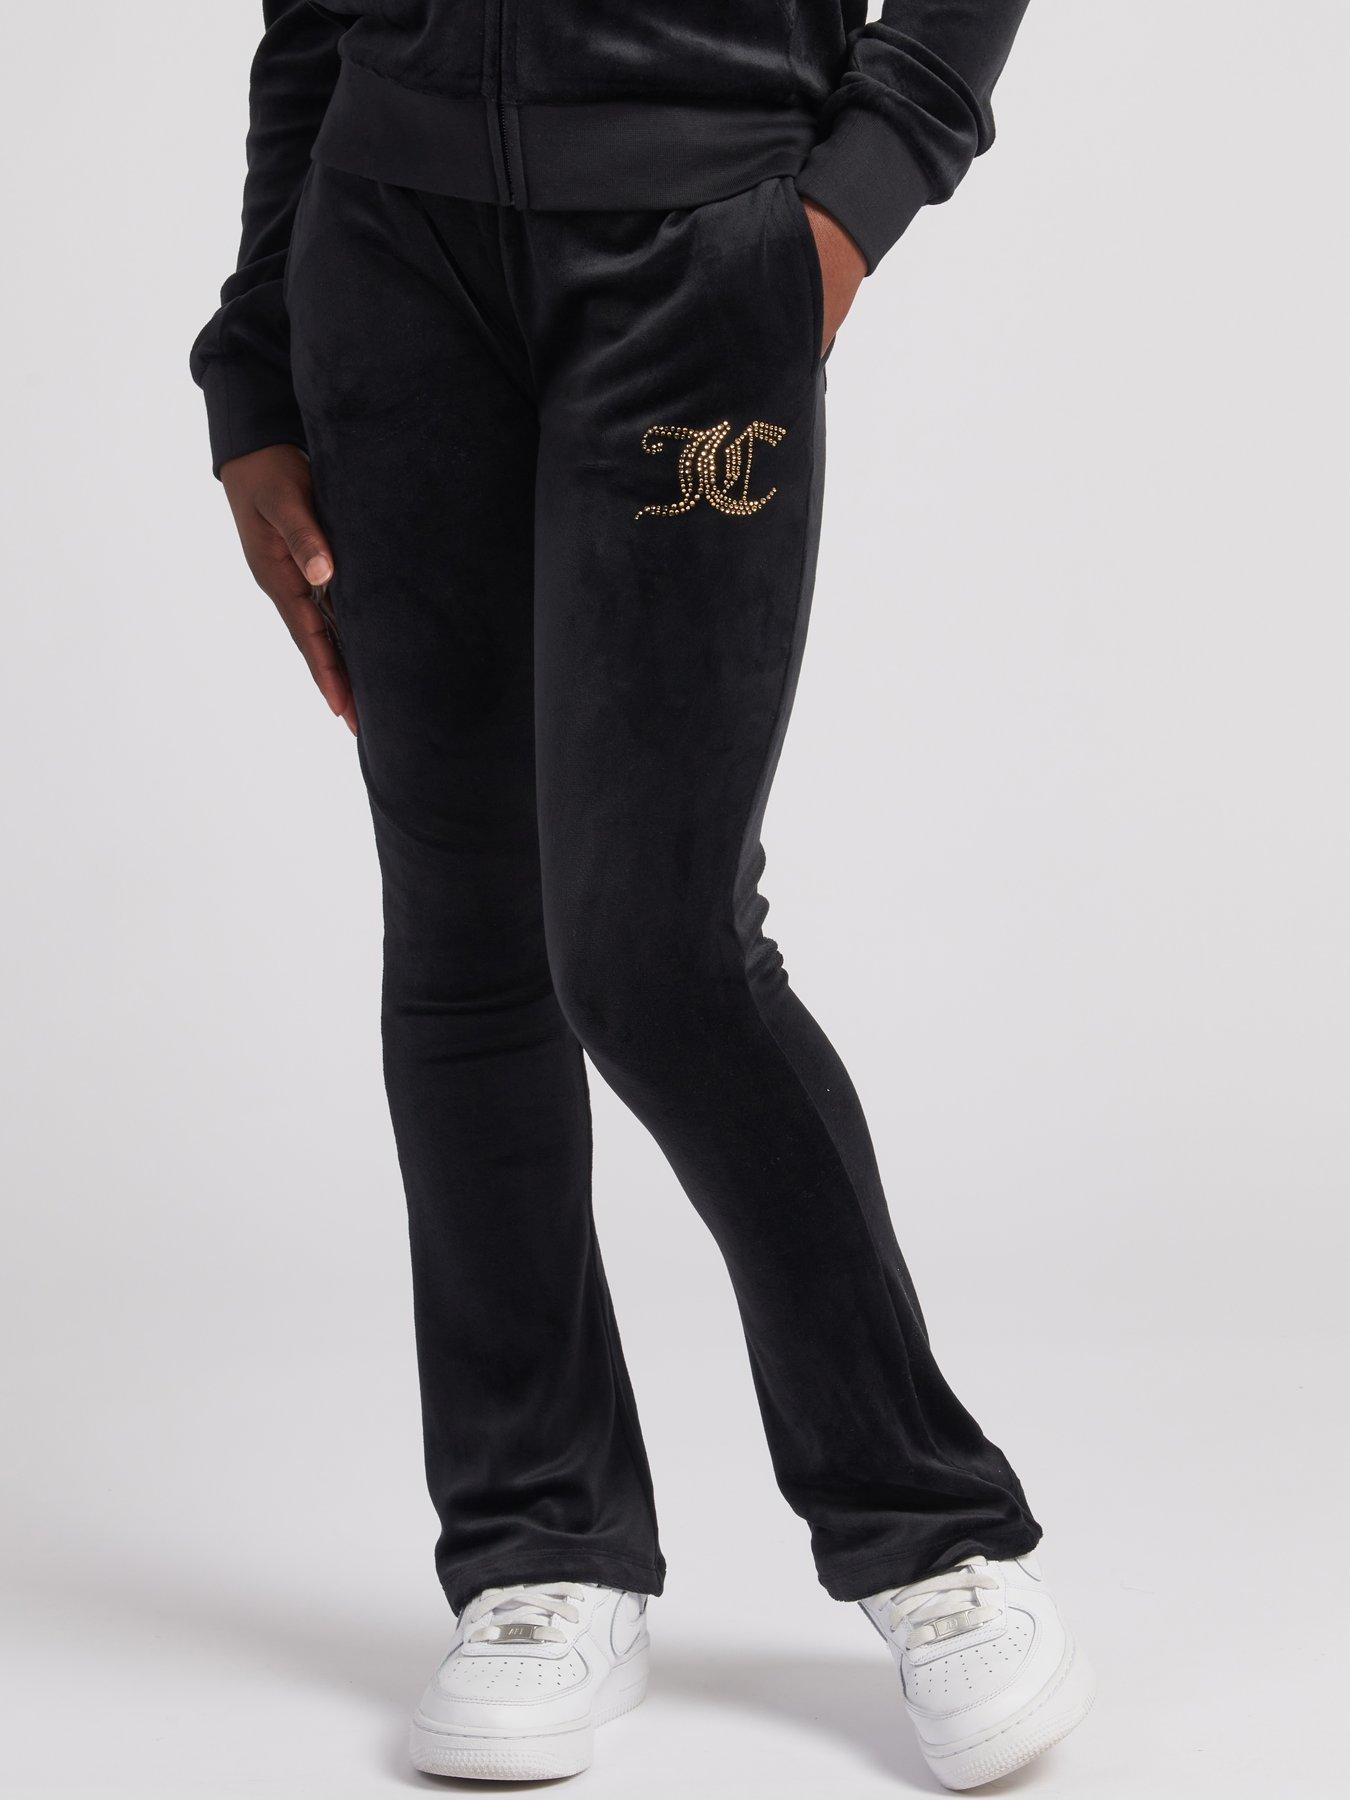 Juicy Couture Velvet Leggings Black Solid Pull On Women's X-Large